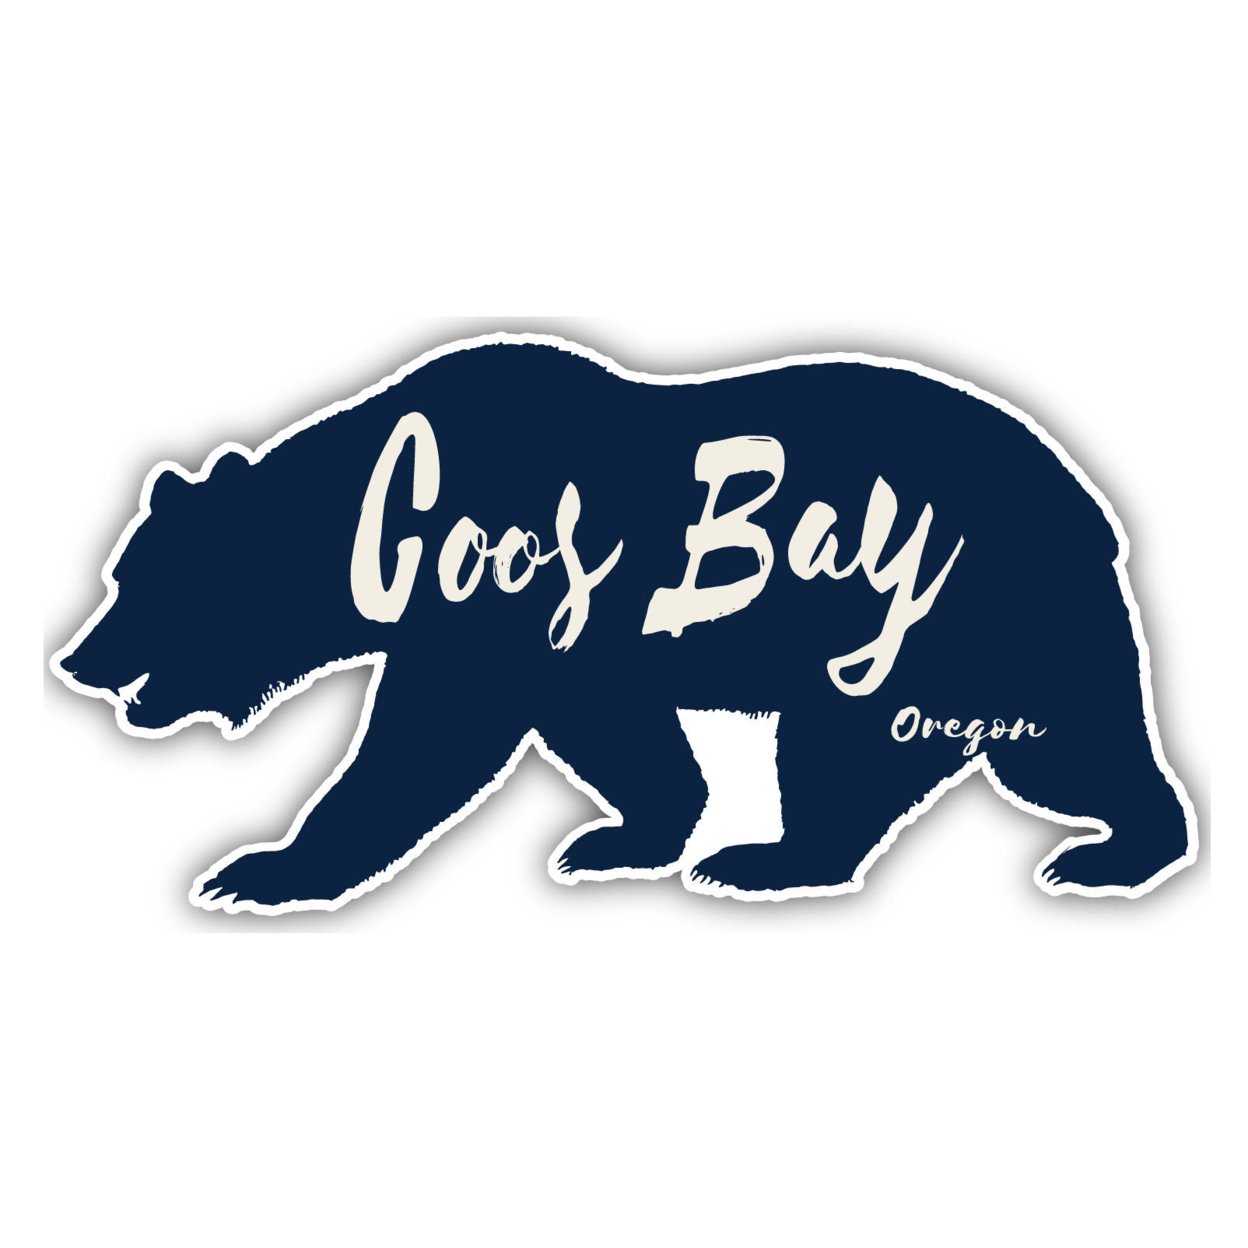 Coos Bay Oregon Souvenir Decorative Stickers (Choose Theme And Size) - Single Unit, 4-Inch, Camp Life